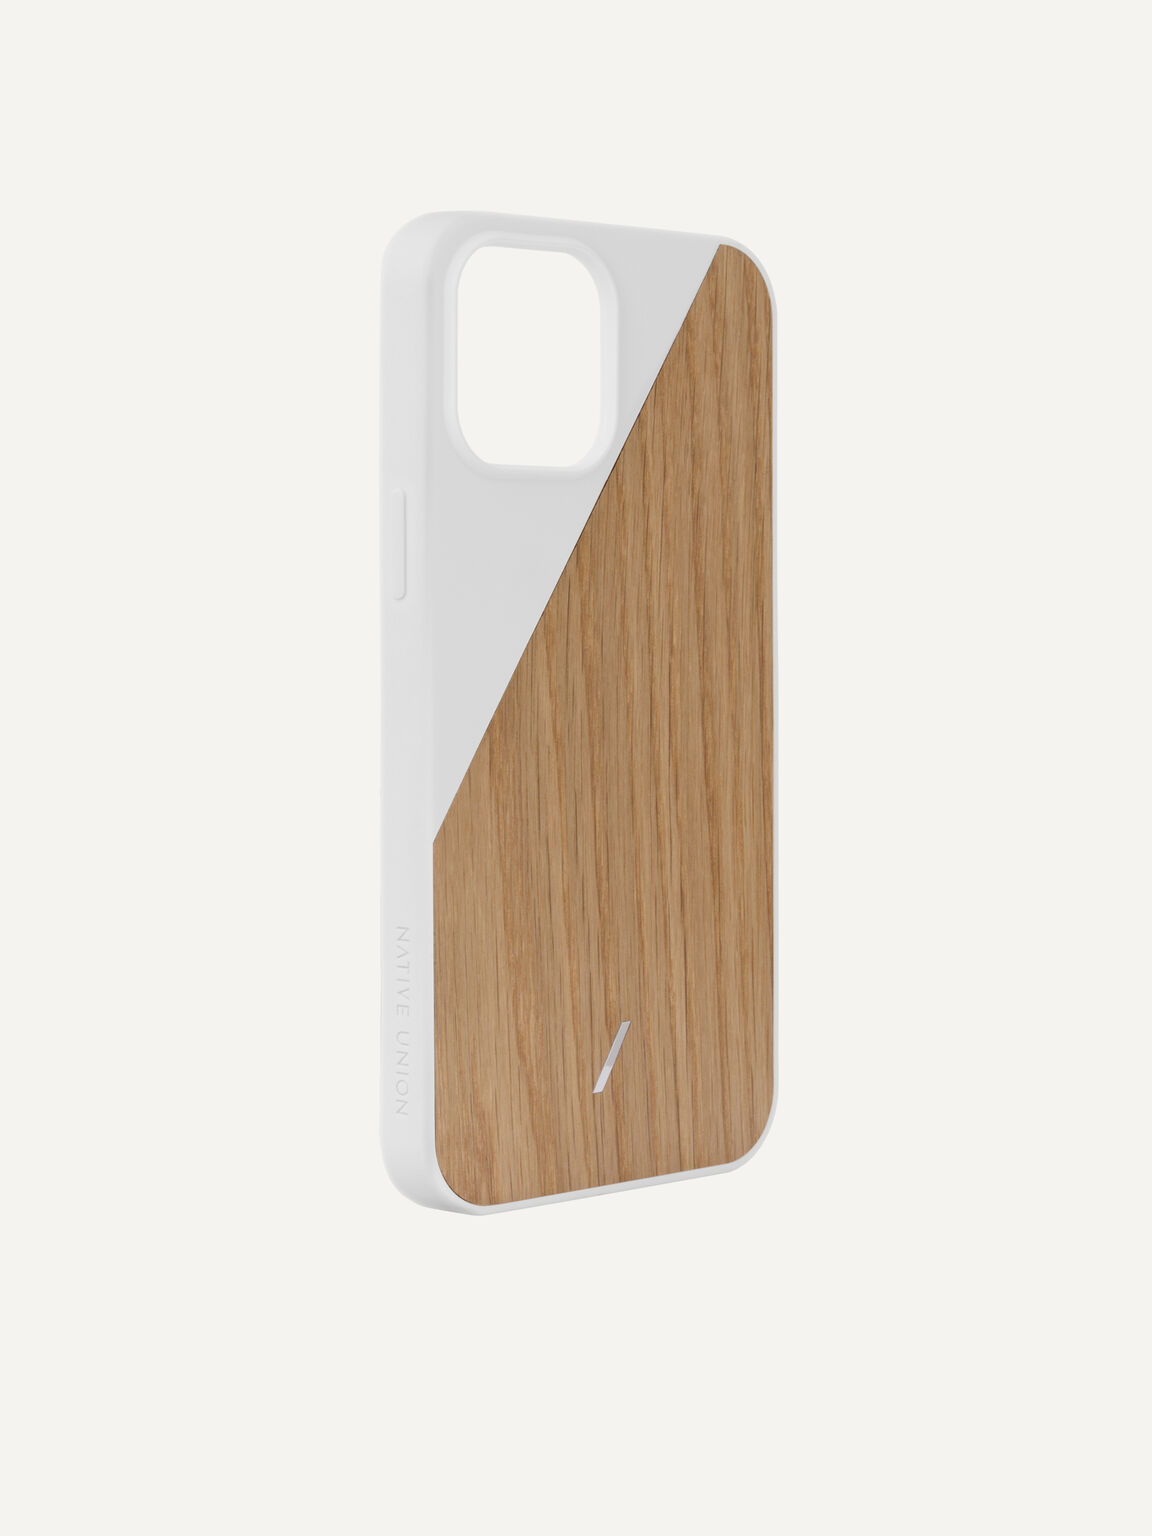 Genuine Wood iPhone 12 Max Pro Case, White